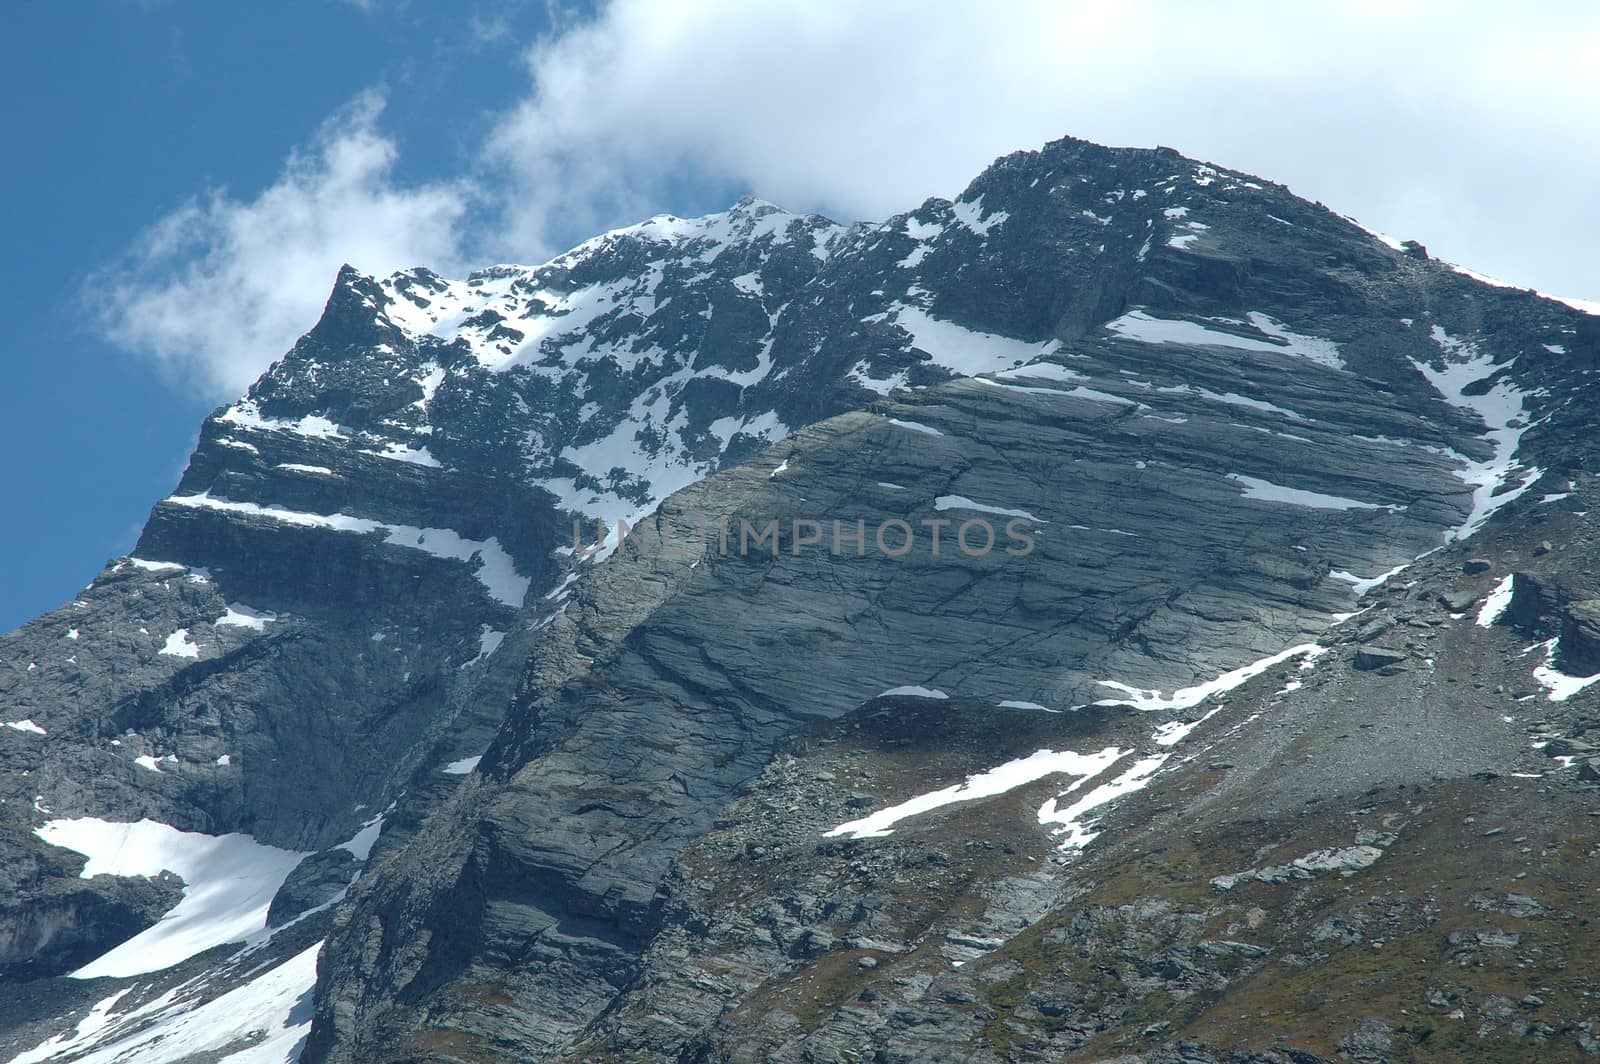 Alps in Switzerland by janhetman